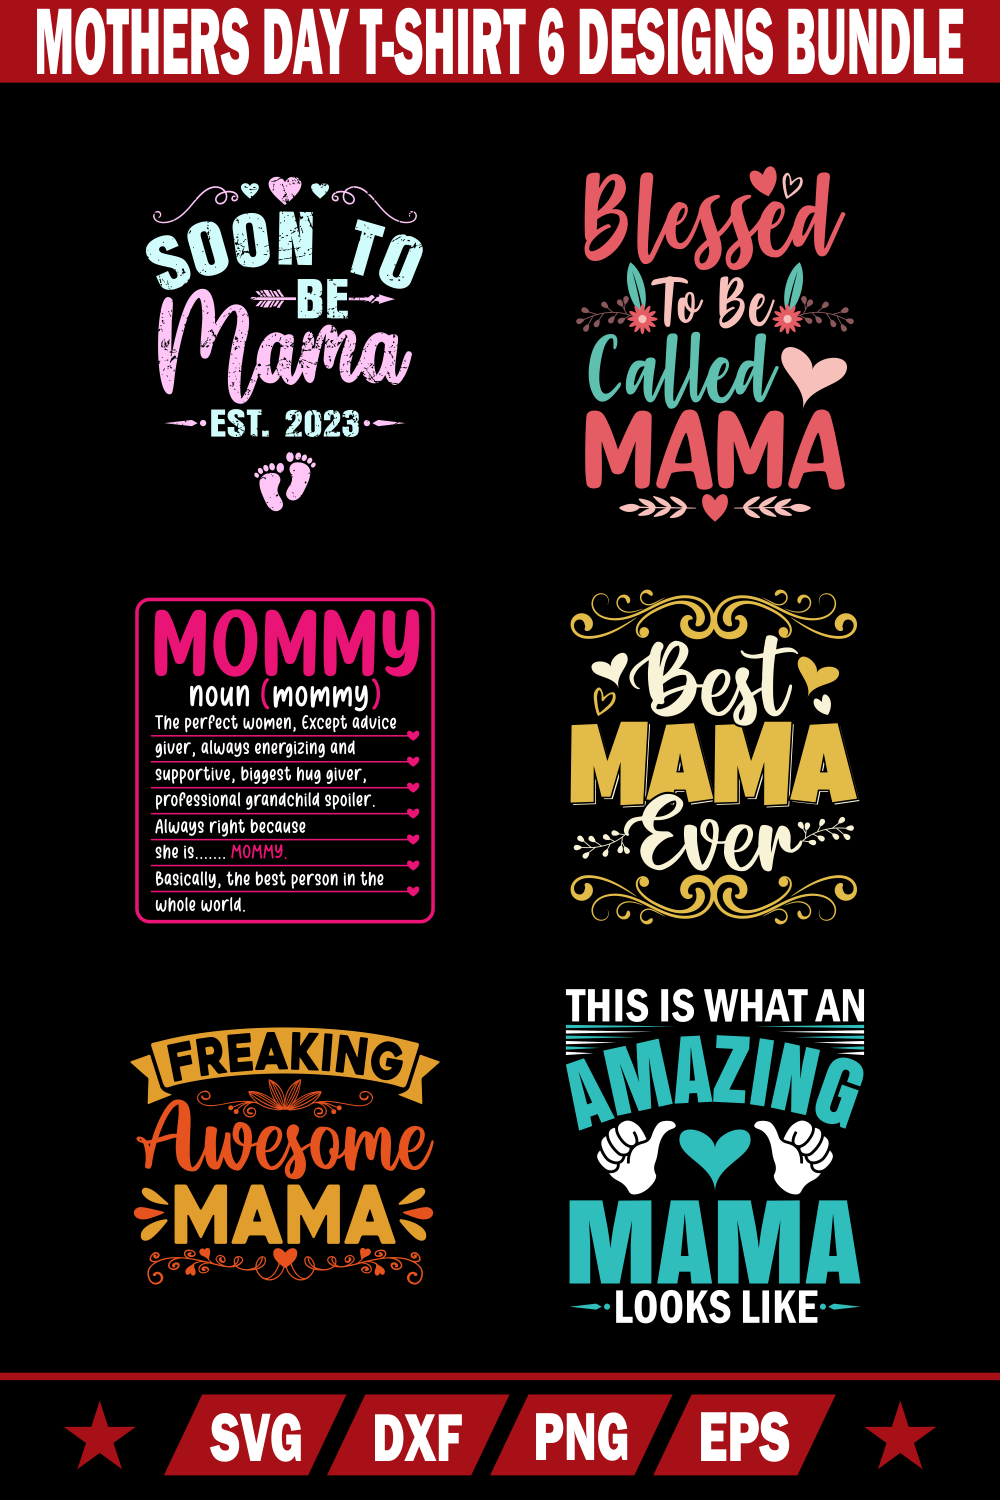 Mothers Day T-Shirt 6 Designs Bundle pinterest preview image.